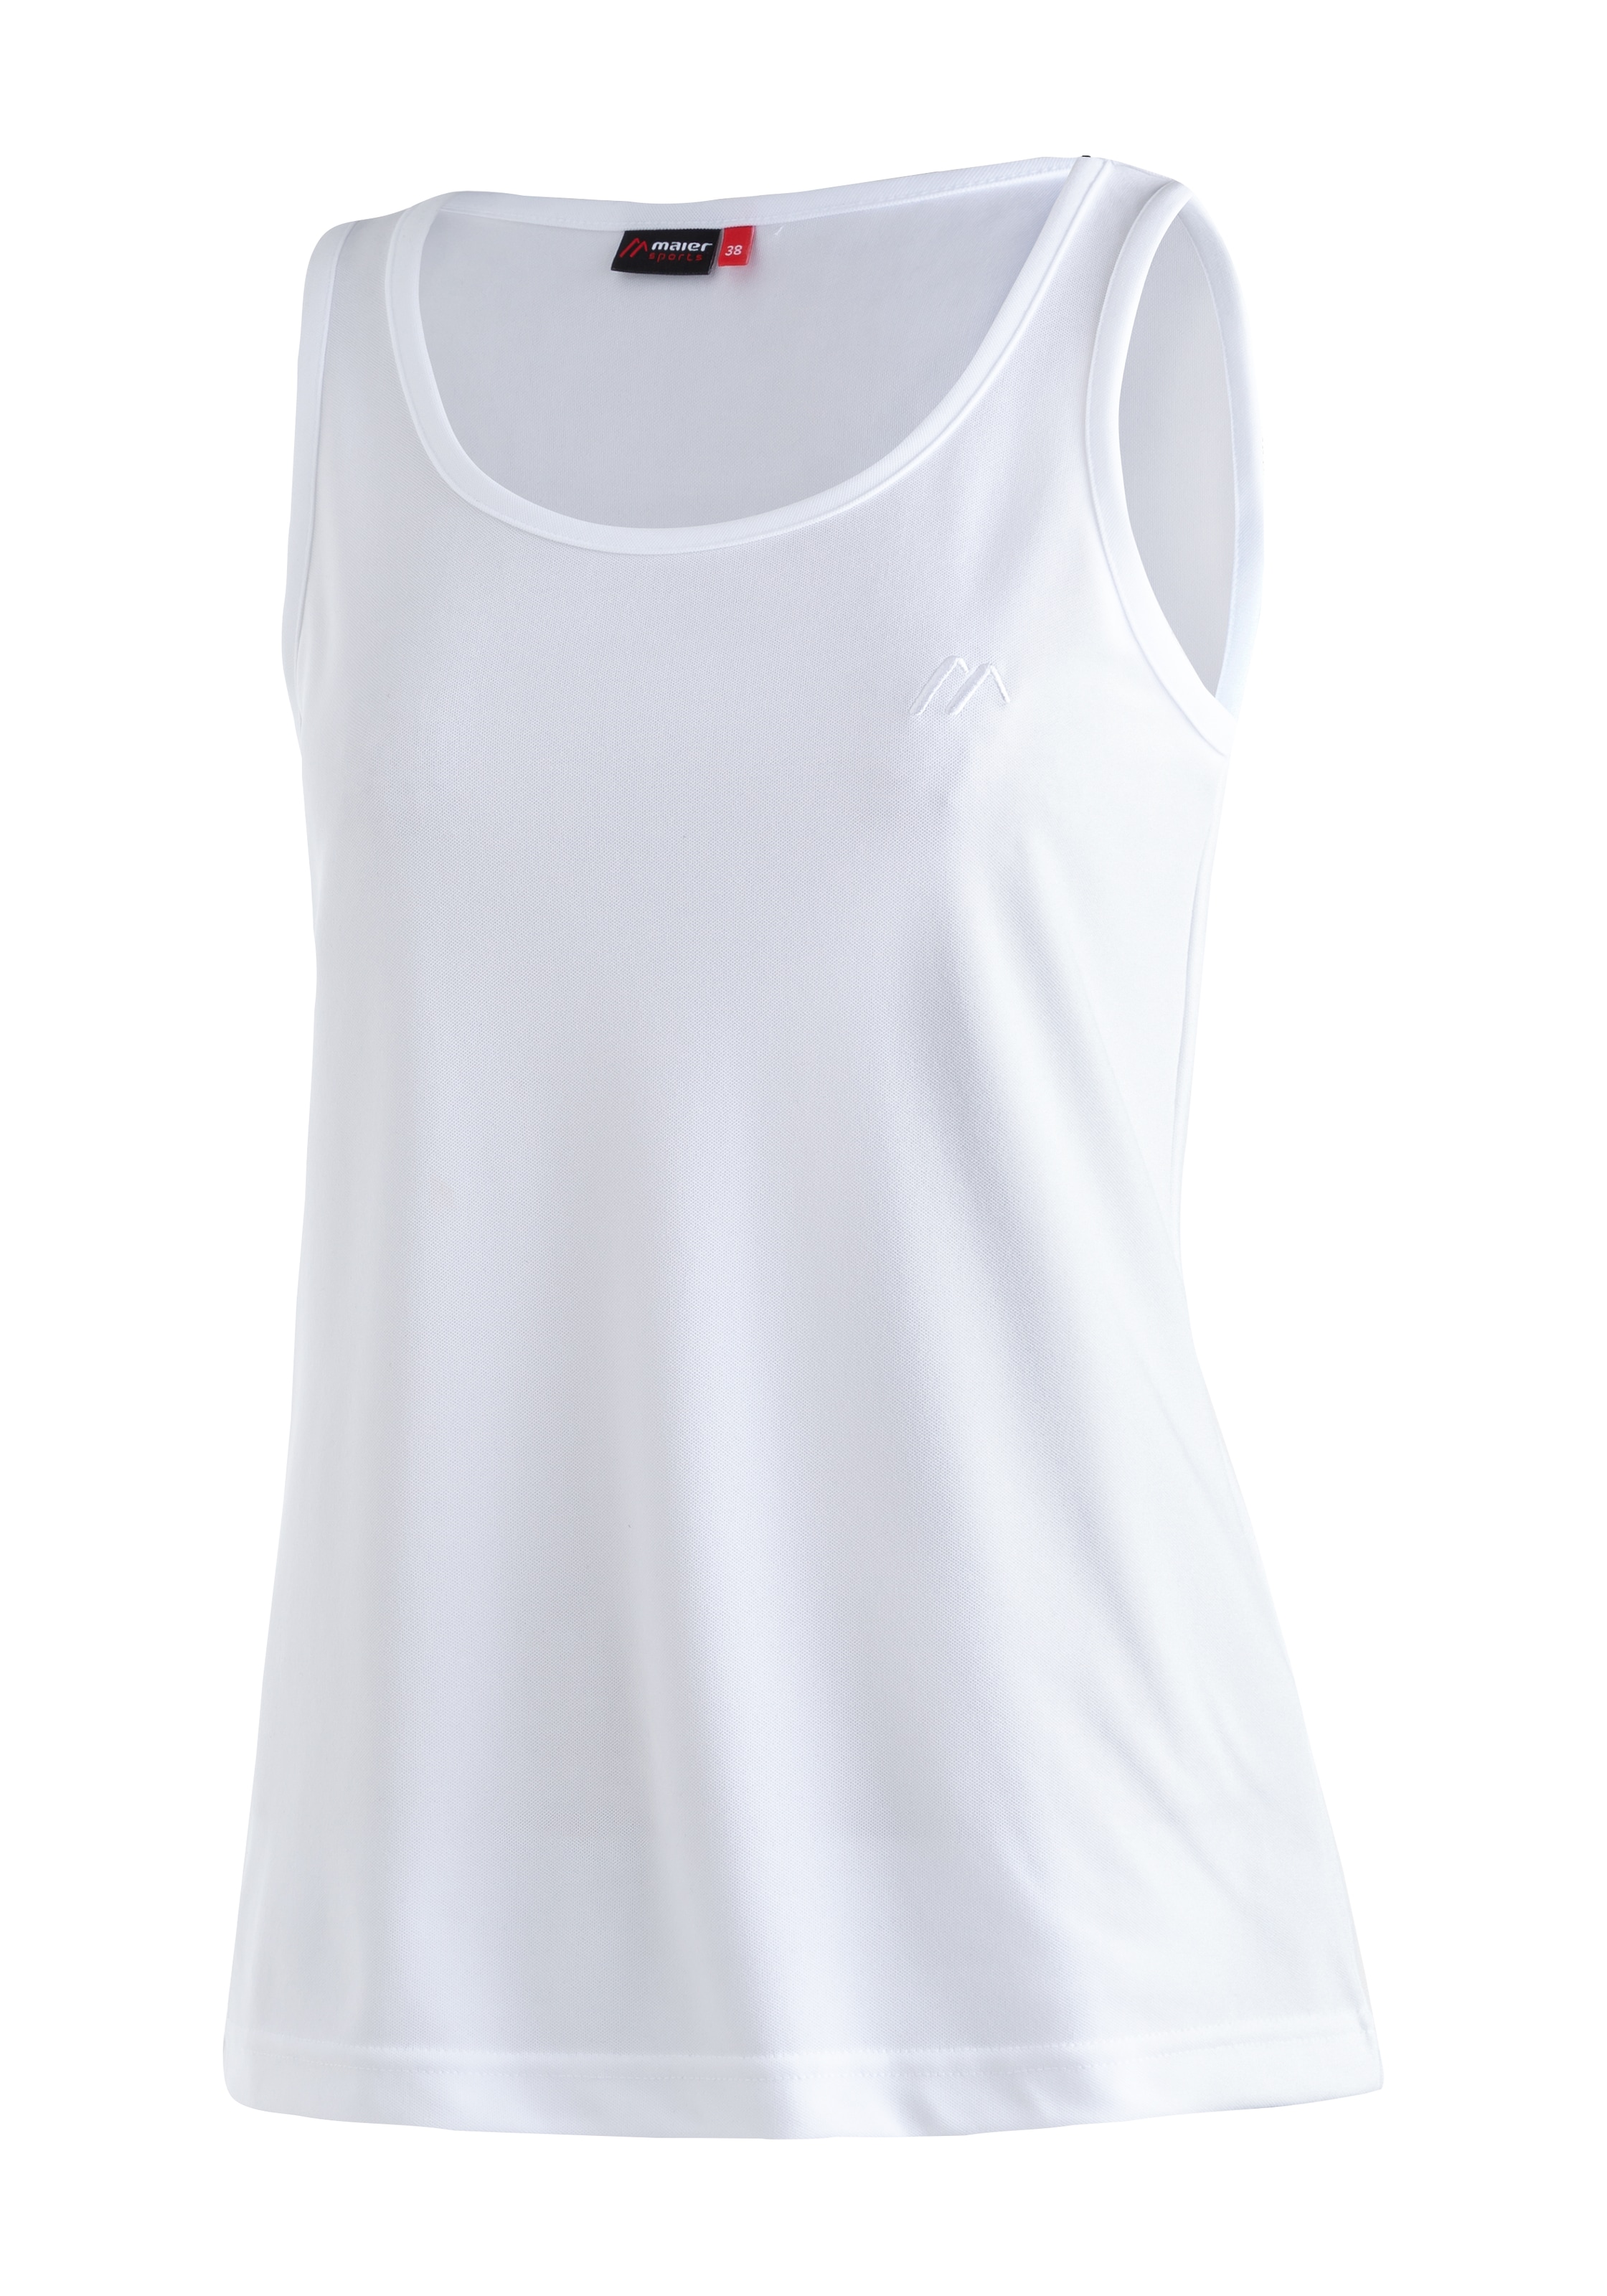 Maier Sports Funktionsshirt »Petra«, Outdoor- ärmelloses Shirt kaufen Aktivitäten, für Tank-Top Sport und Damen